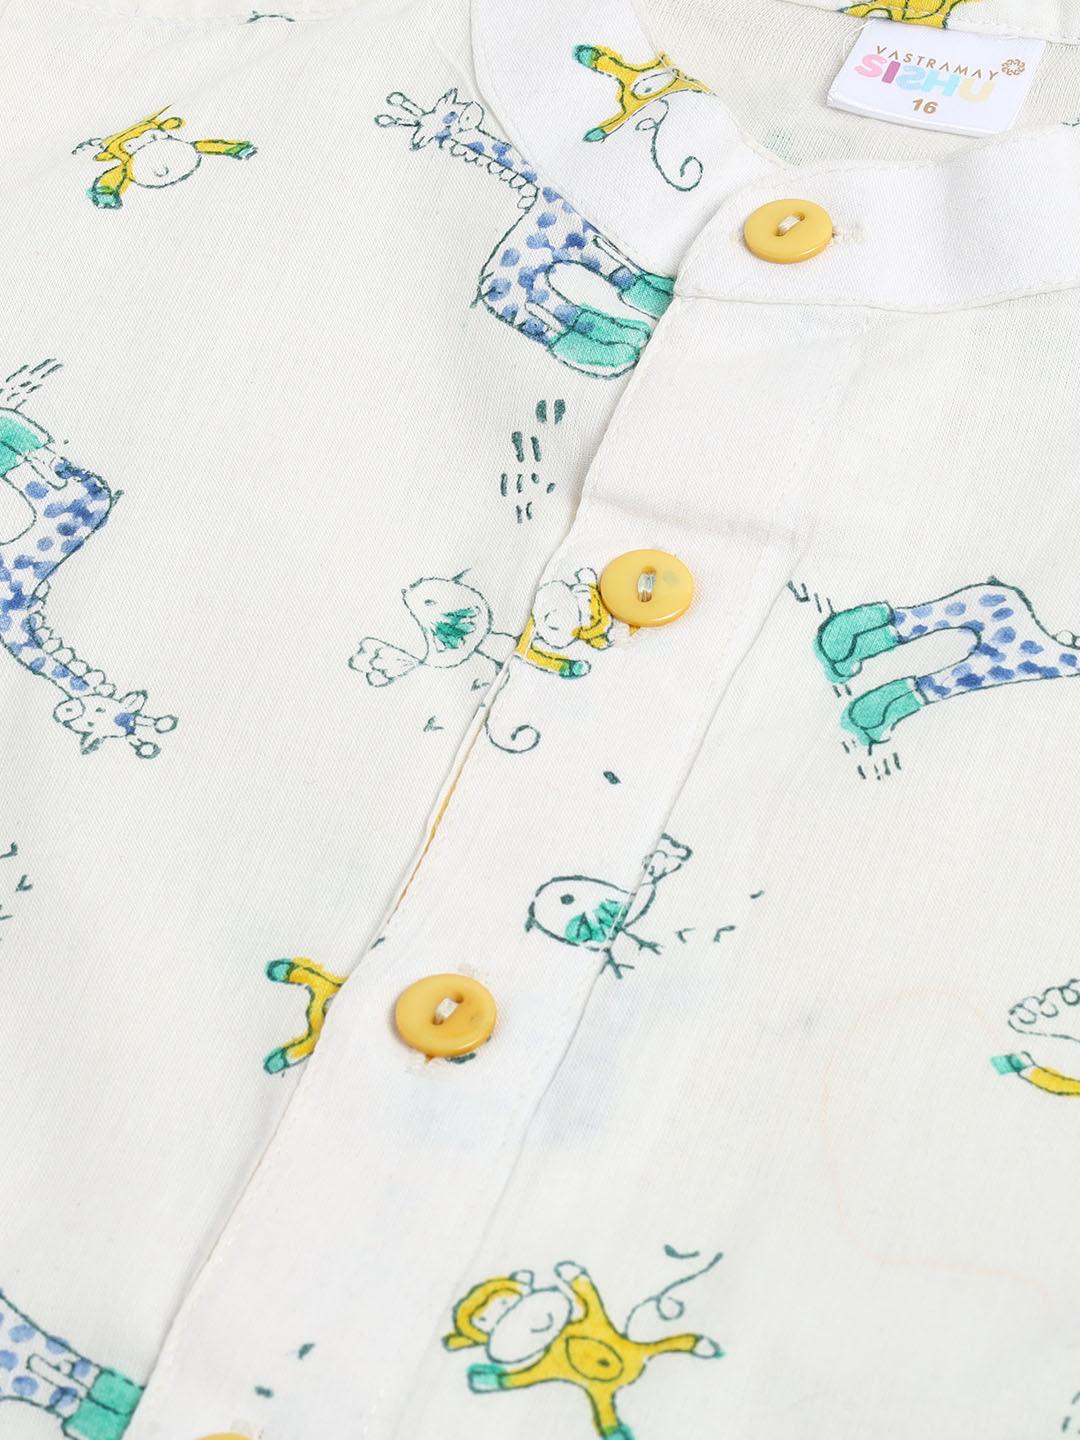 VASTRAMAY SISHU Boy's White Printed Cotton Kurta Pyjama Set - Uboric